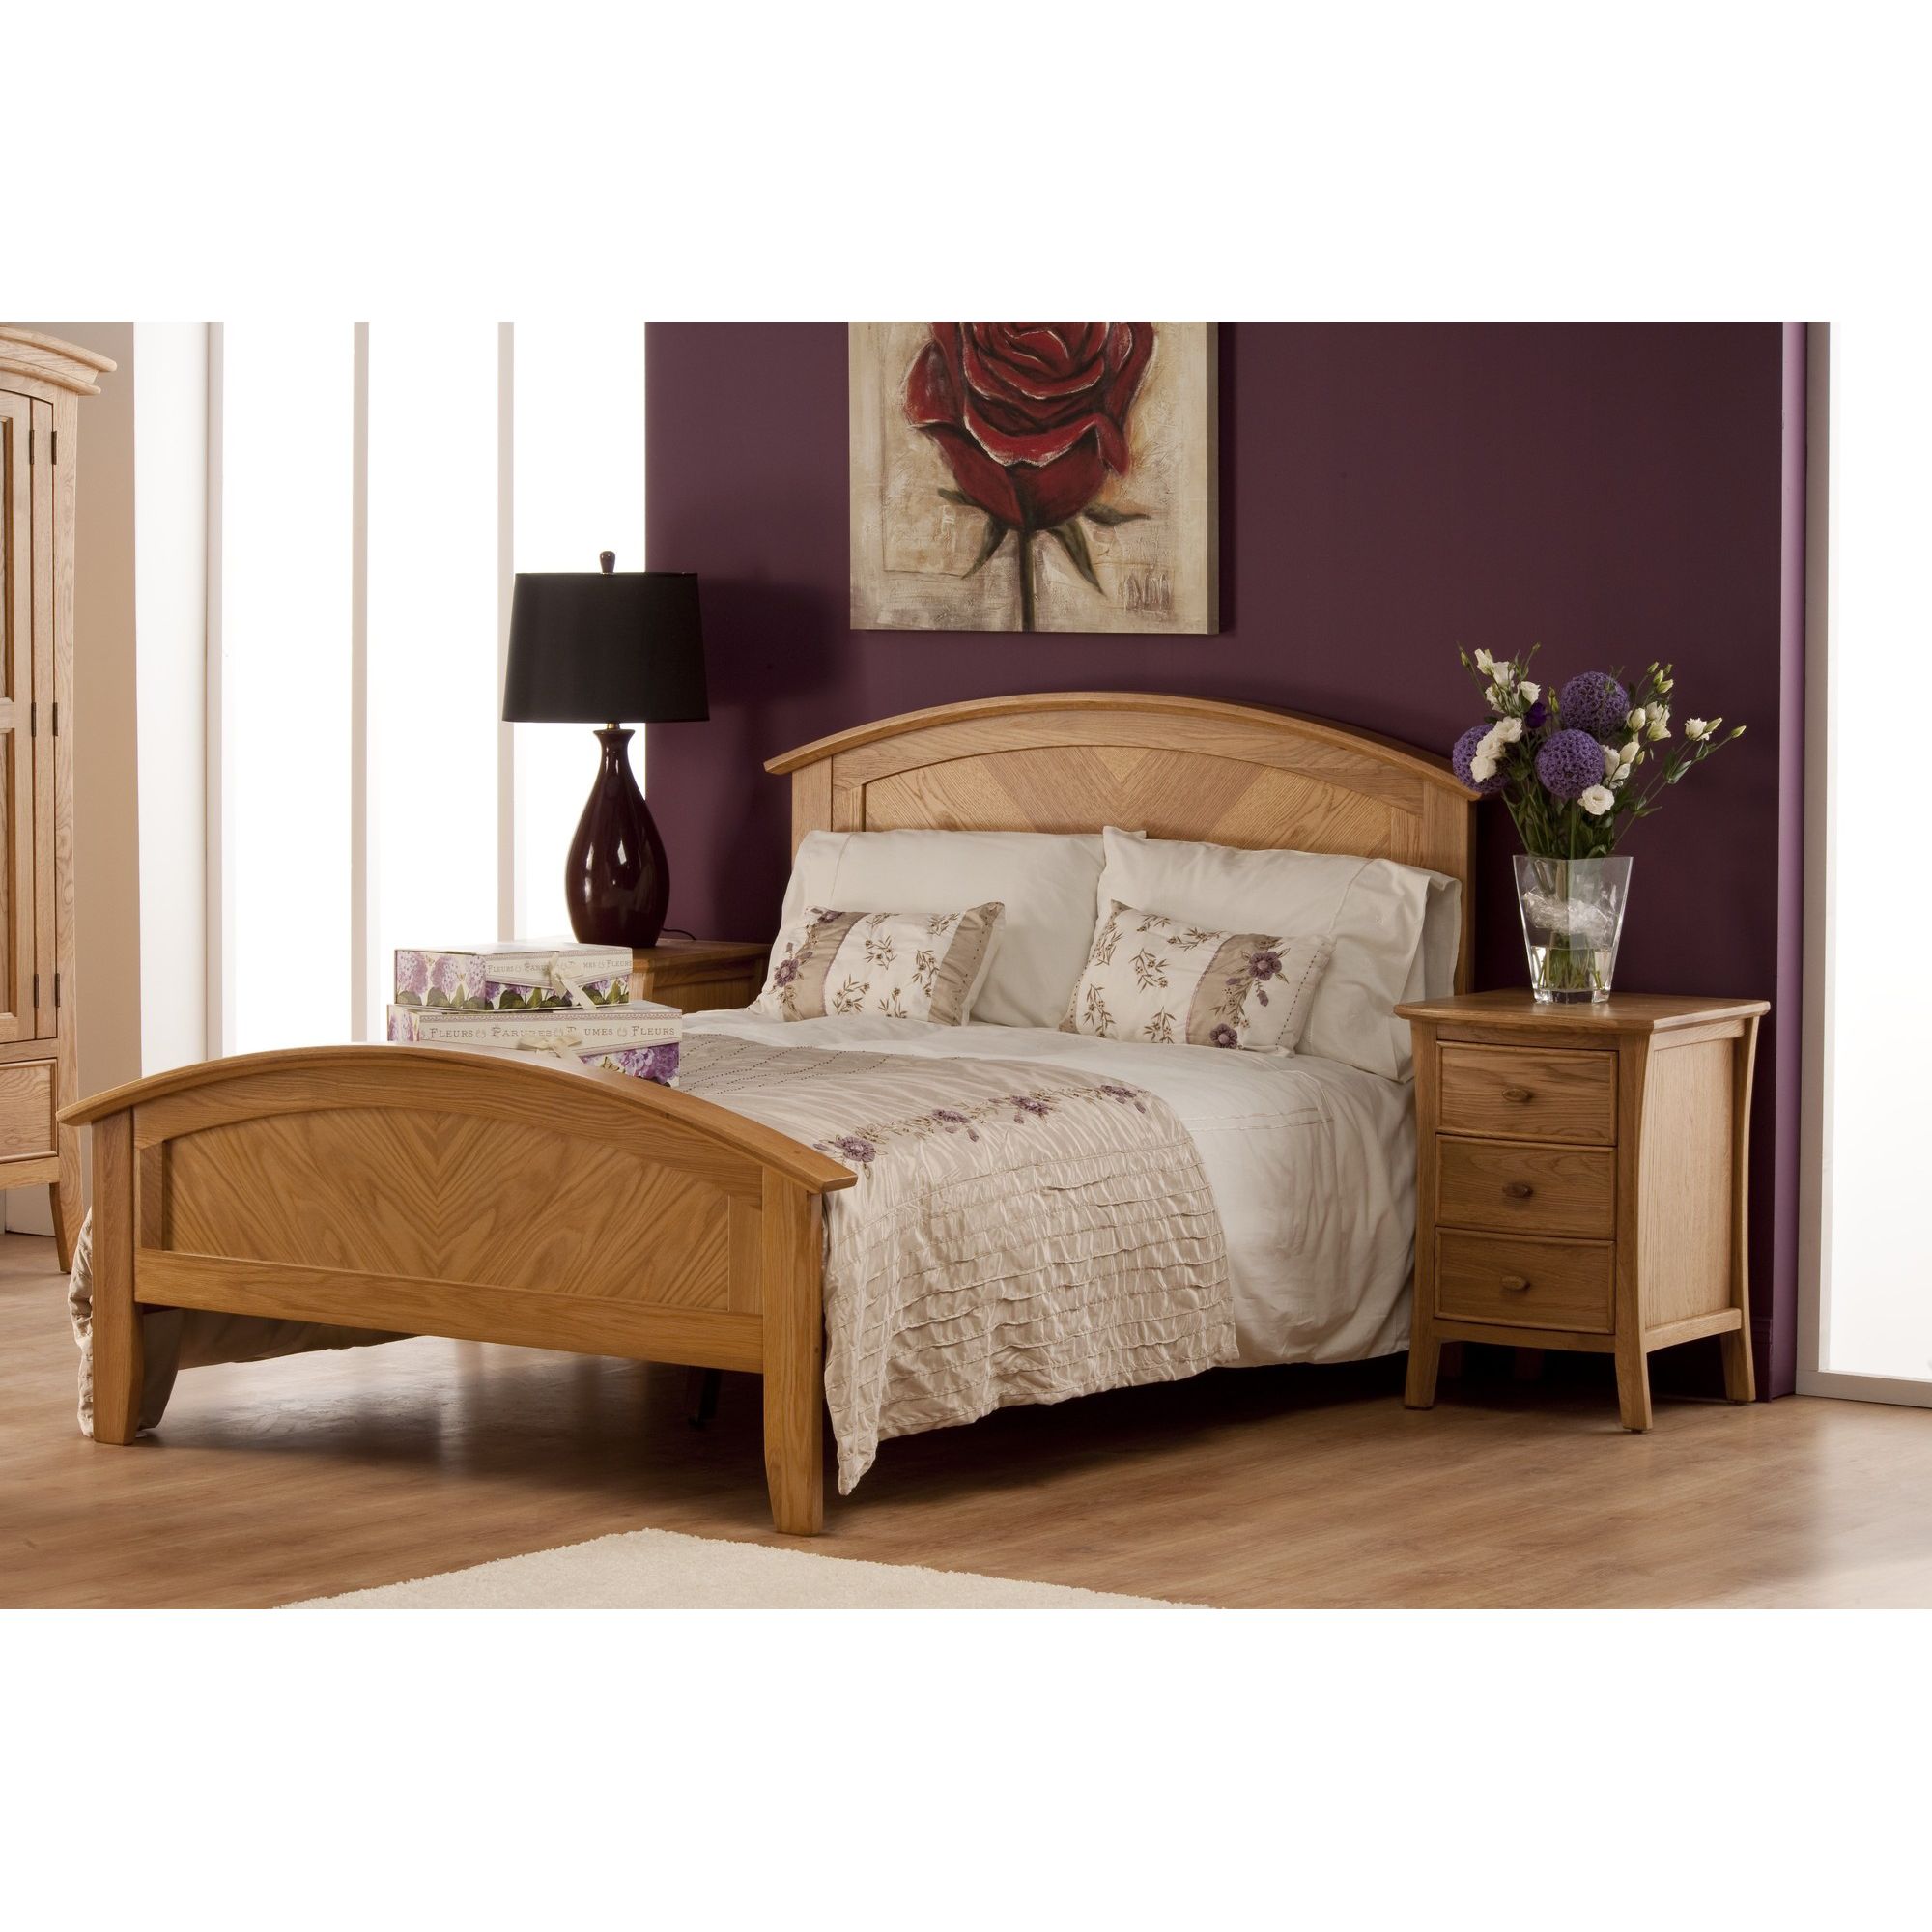 World Furniture Calgary Bed Frame - Kingsize at Tesco Direct